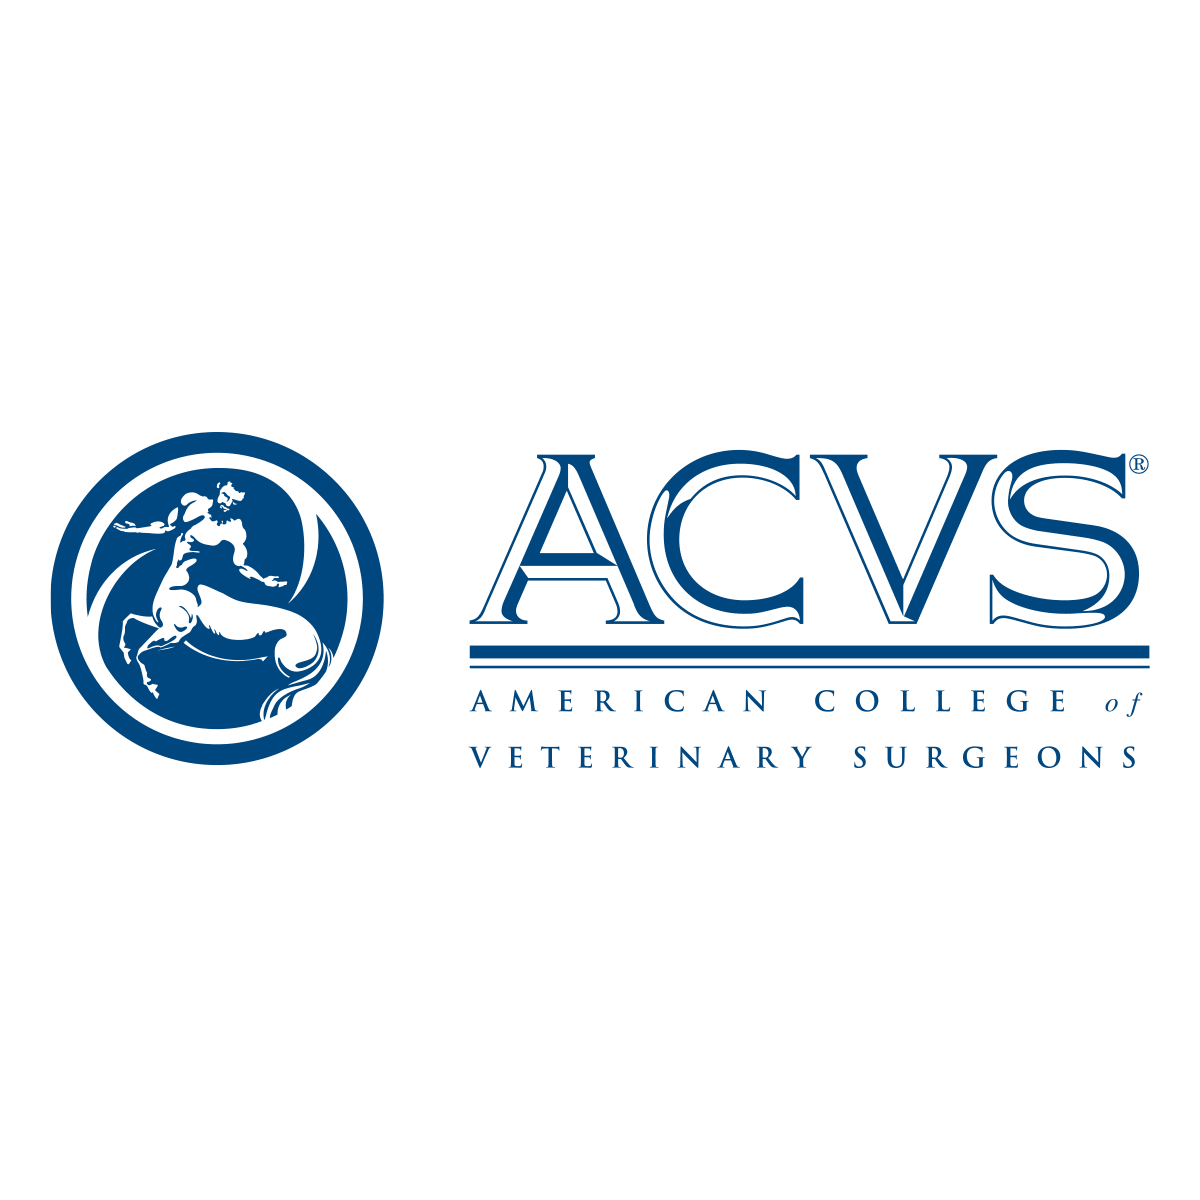 American College of Veterinary Surgeons - ACVS